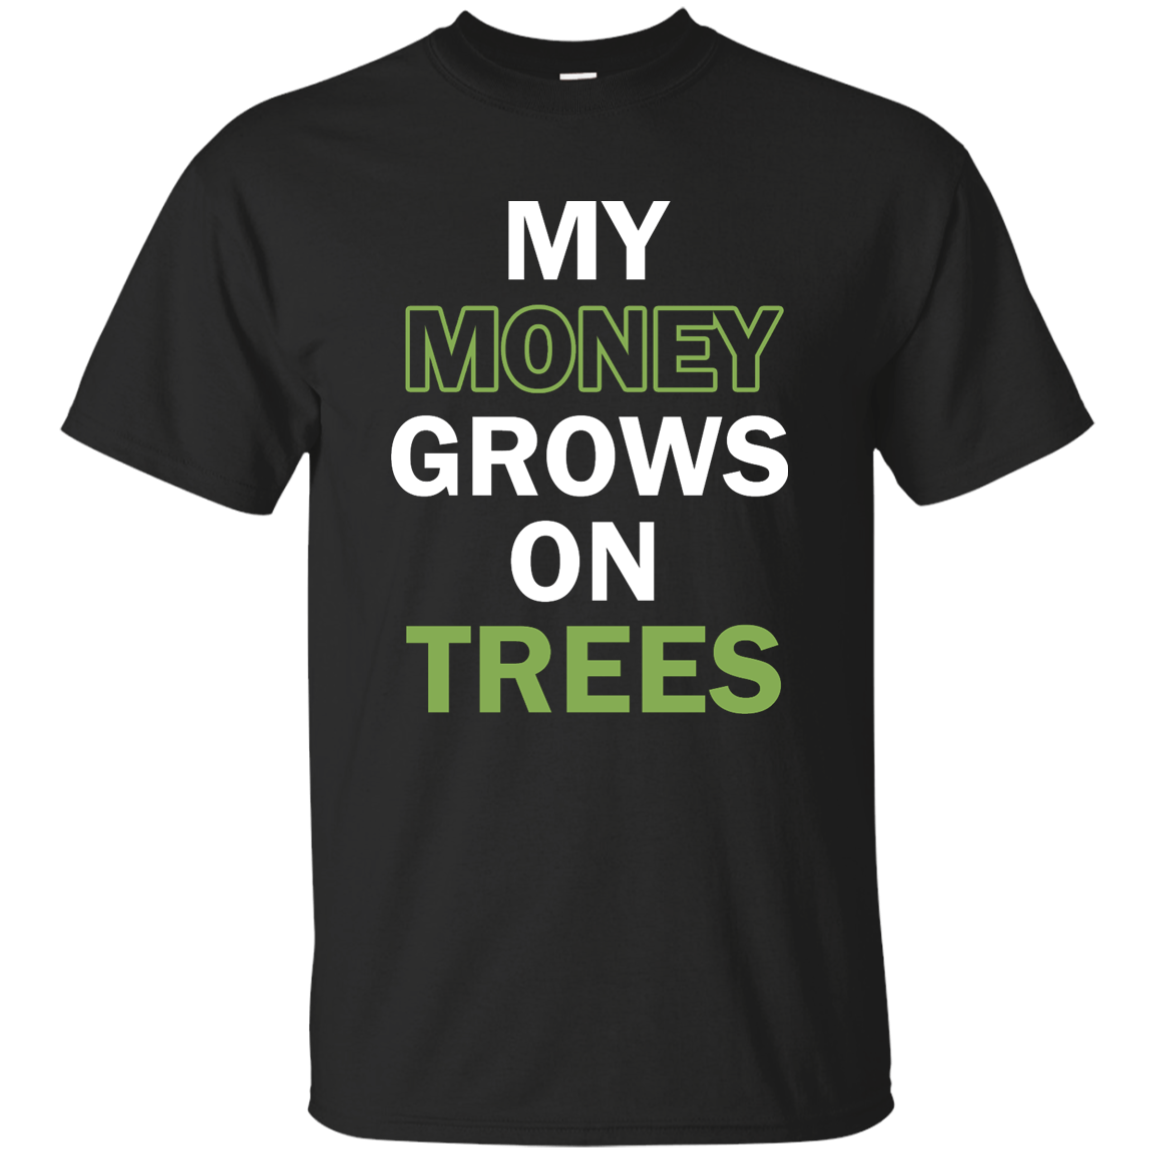 My money grows on trees shirt, tank, hoodie